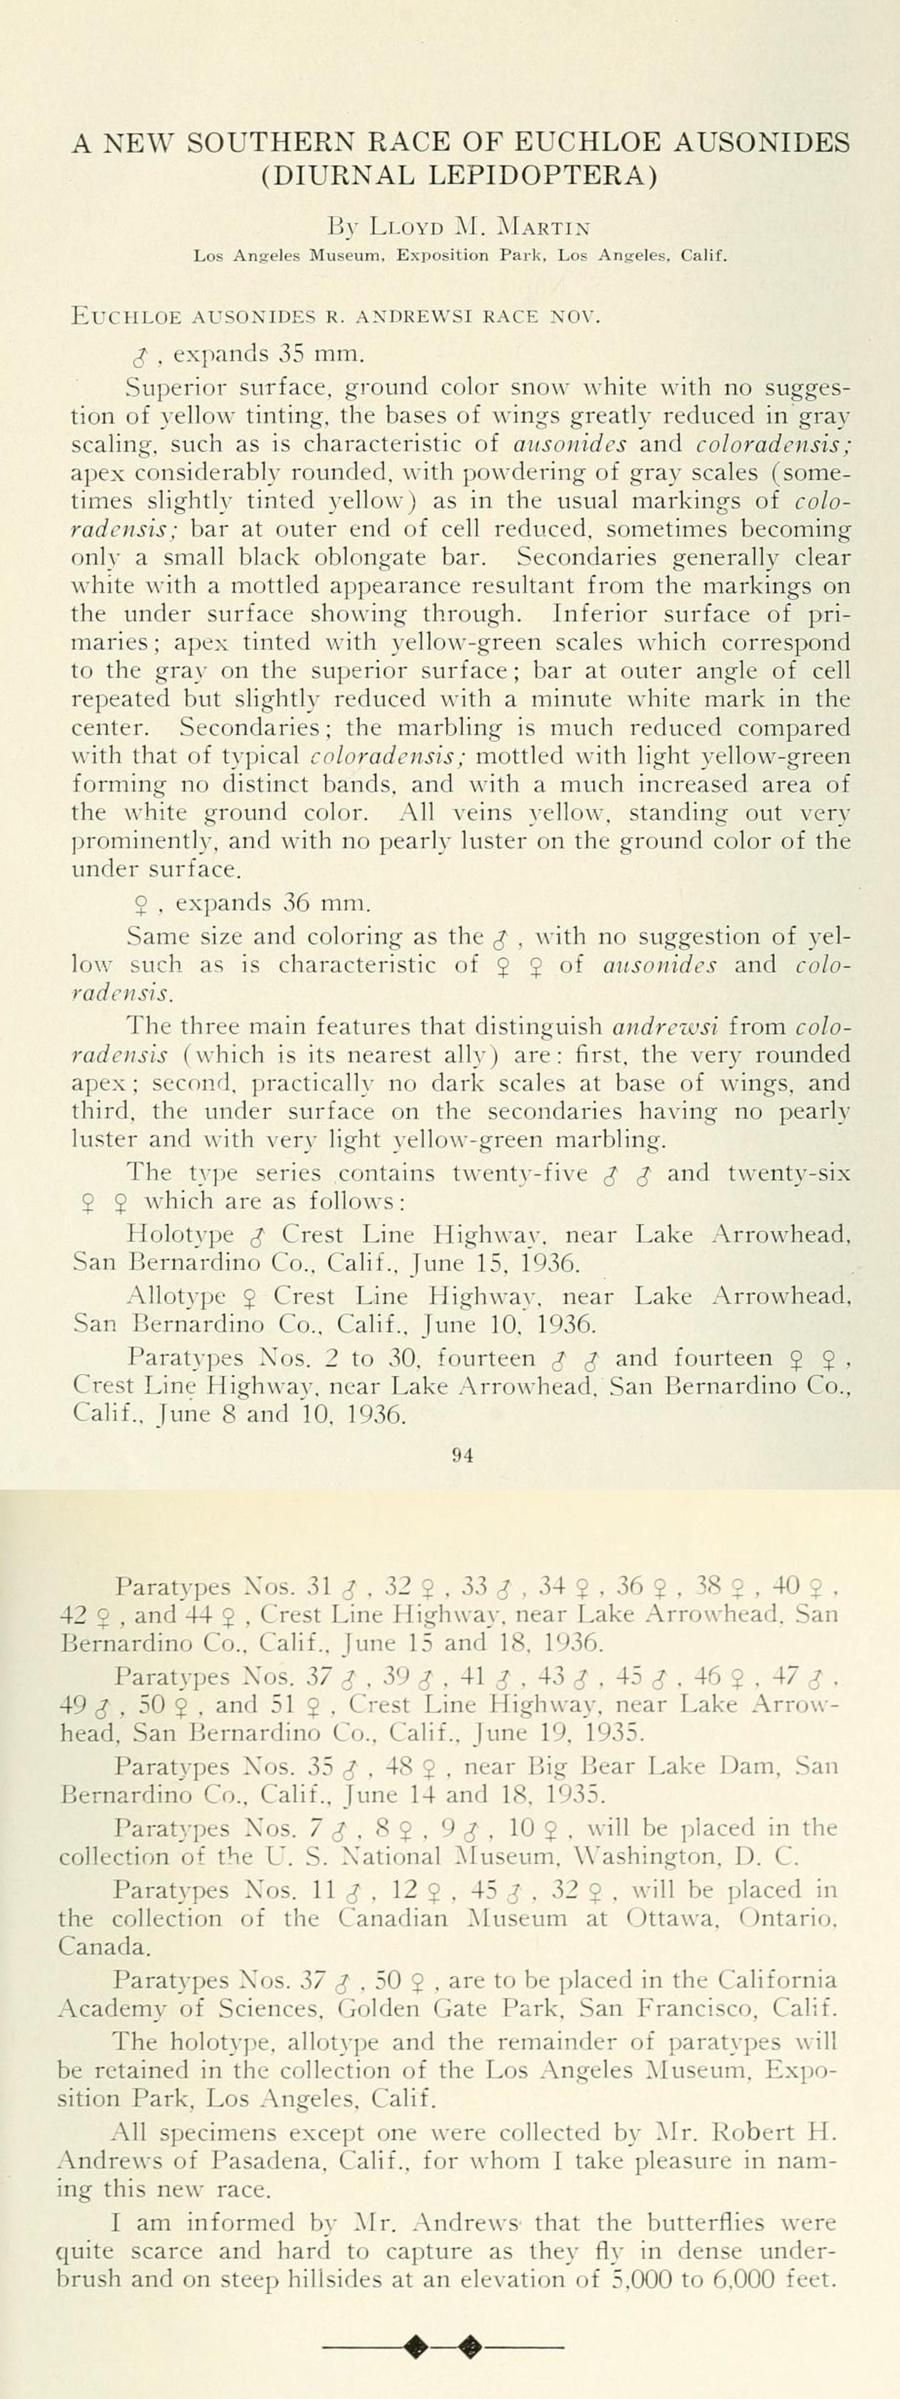 Original description of Euchloe (hyantis) andrewsi by Lloyd Martin in 1936